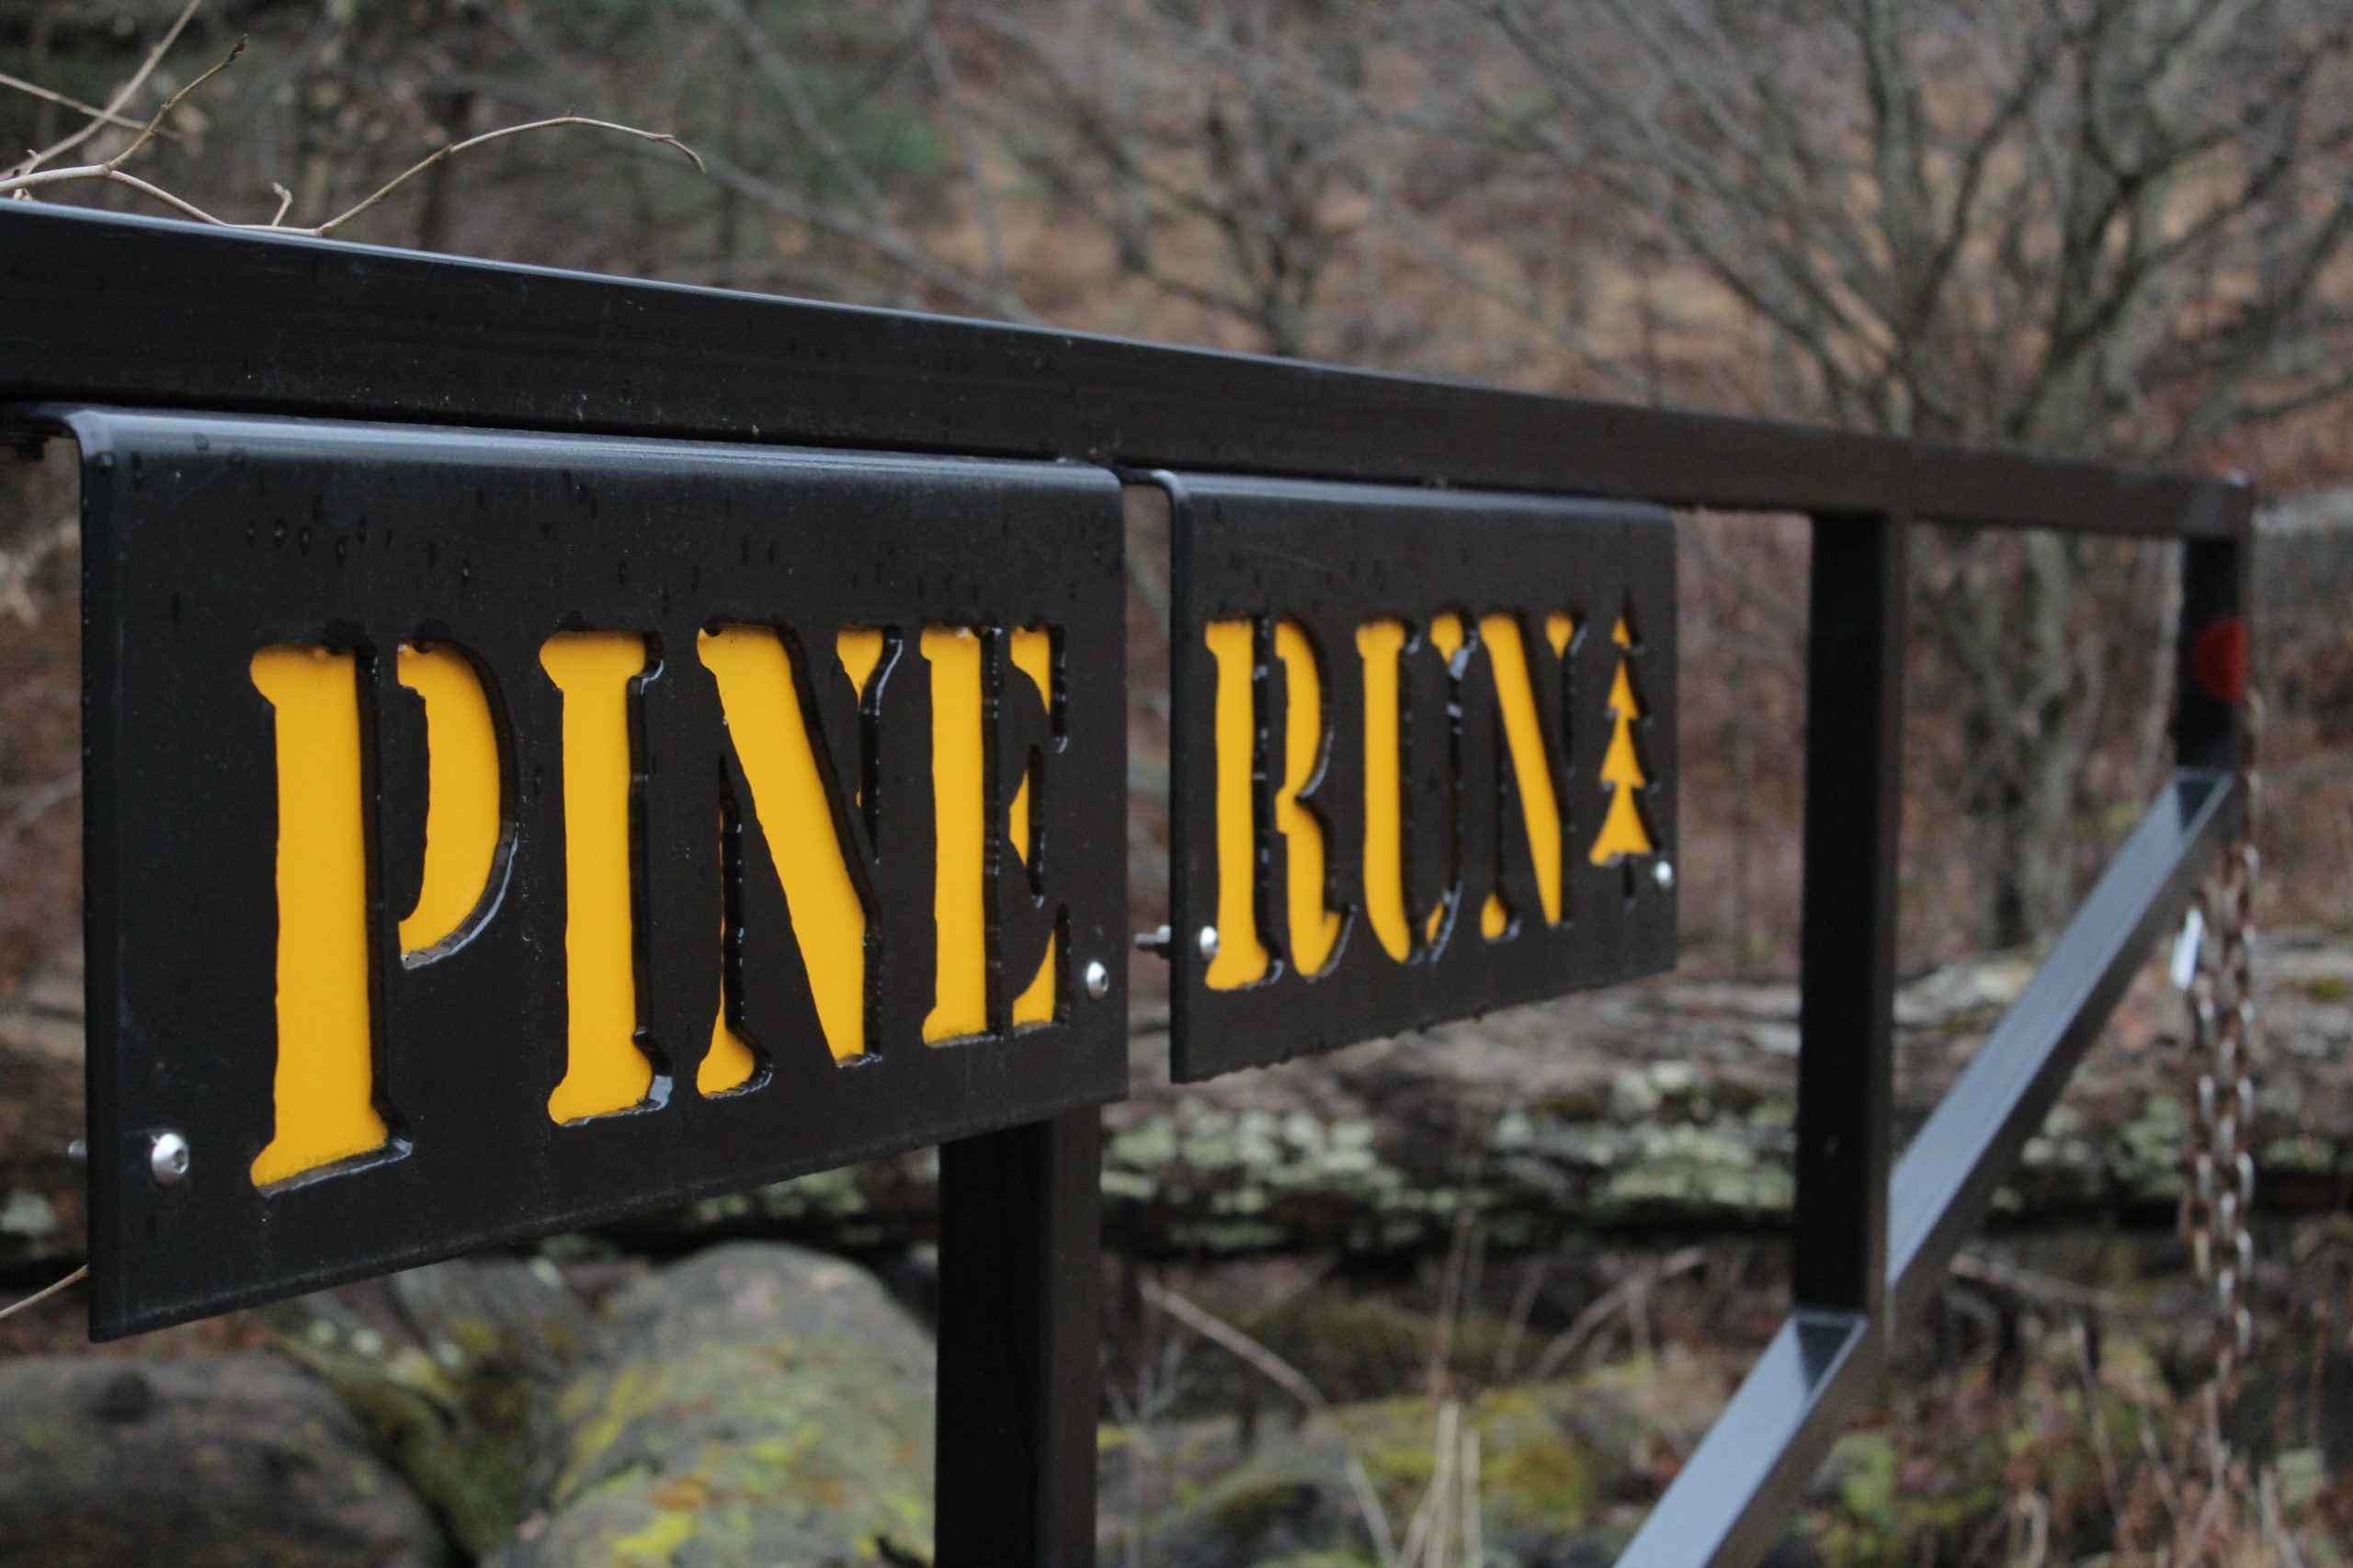 Pine Run sign